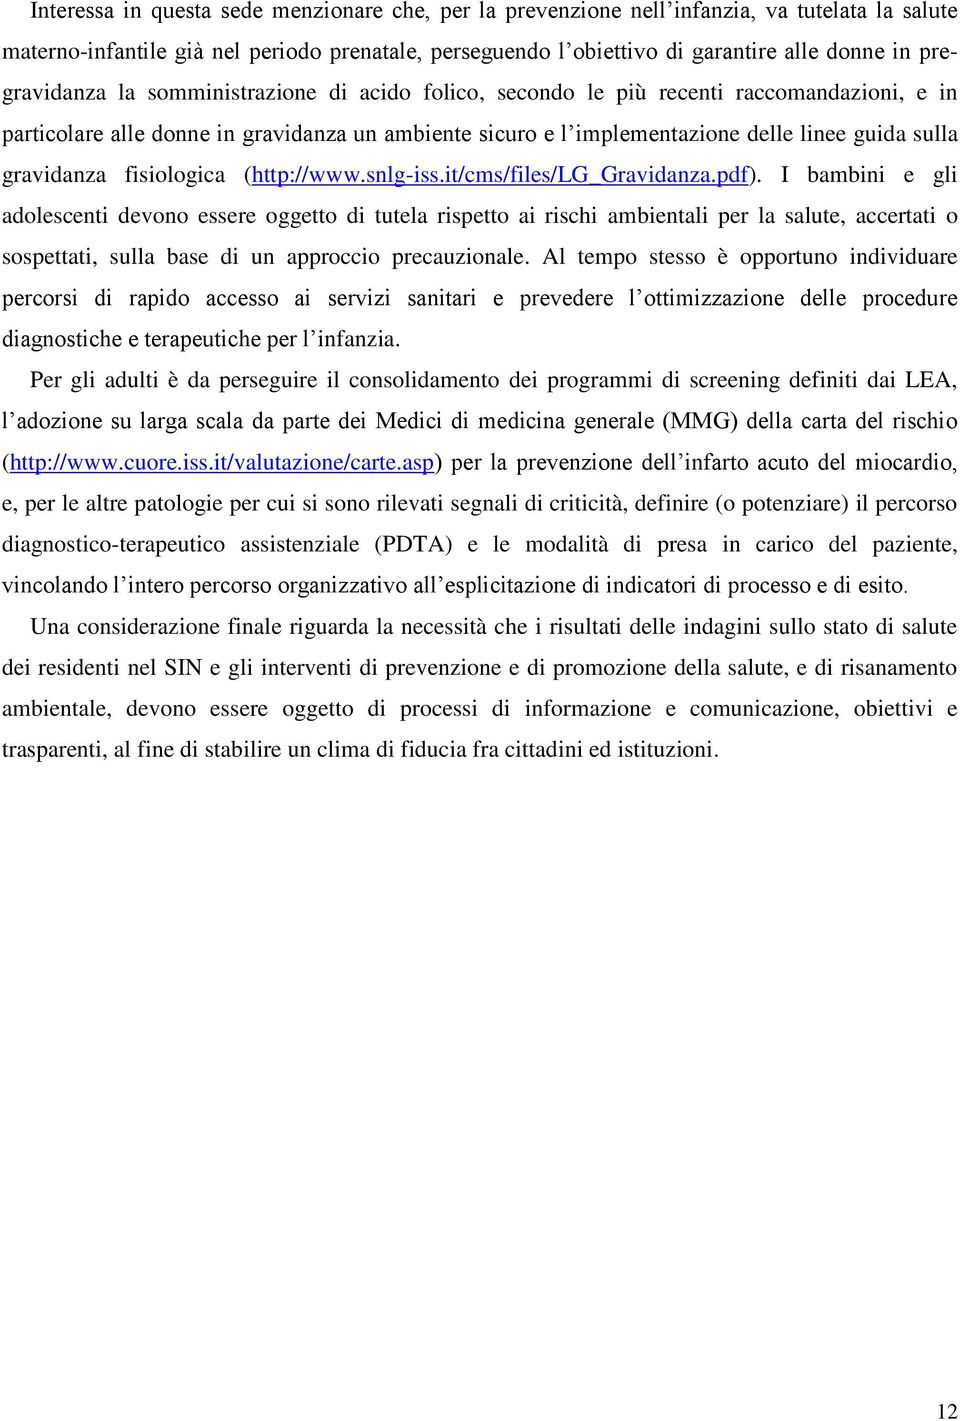 gravidanza fisiologica (http://www.snlg-iss.it/cms/files/lg_gravidanza.pdf).